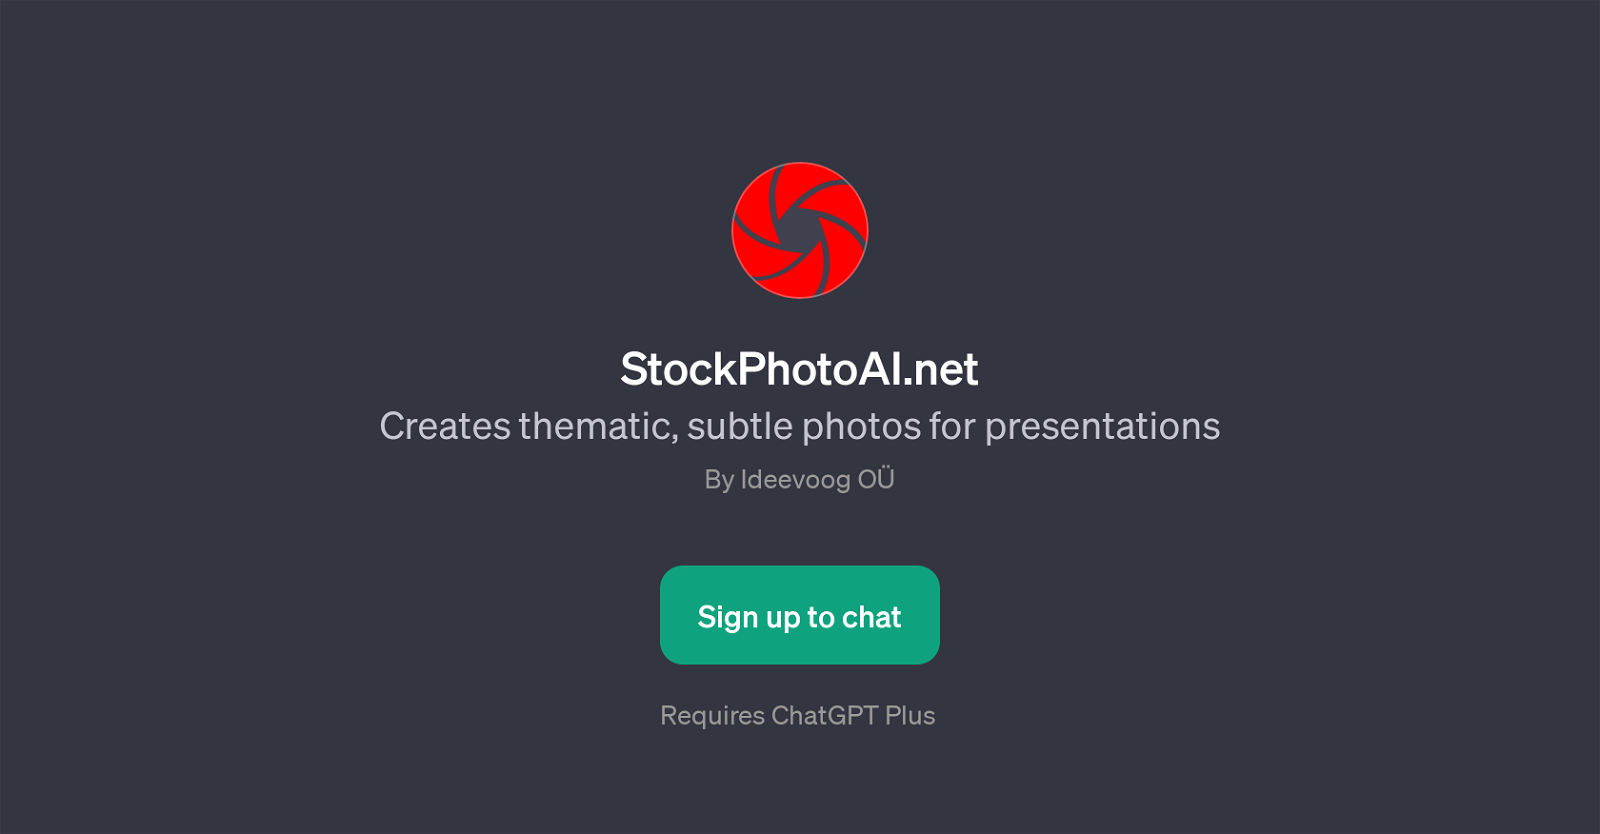 StockPhotoAI.net website